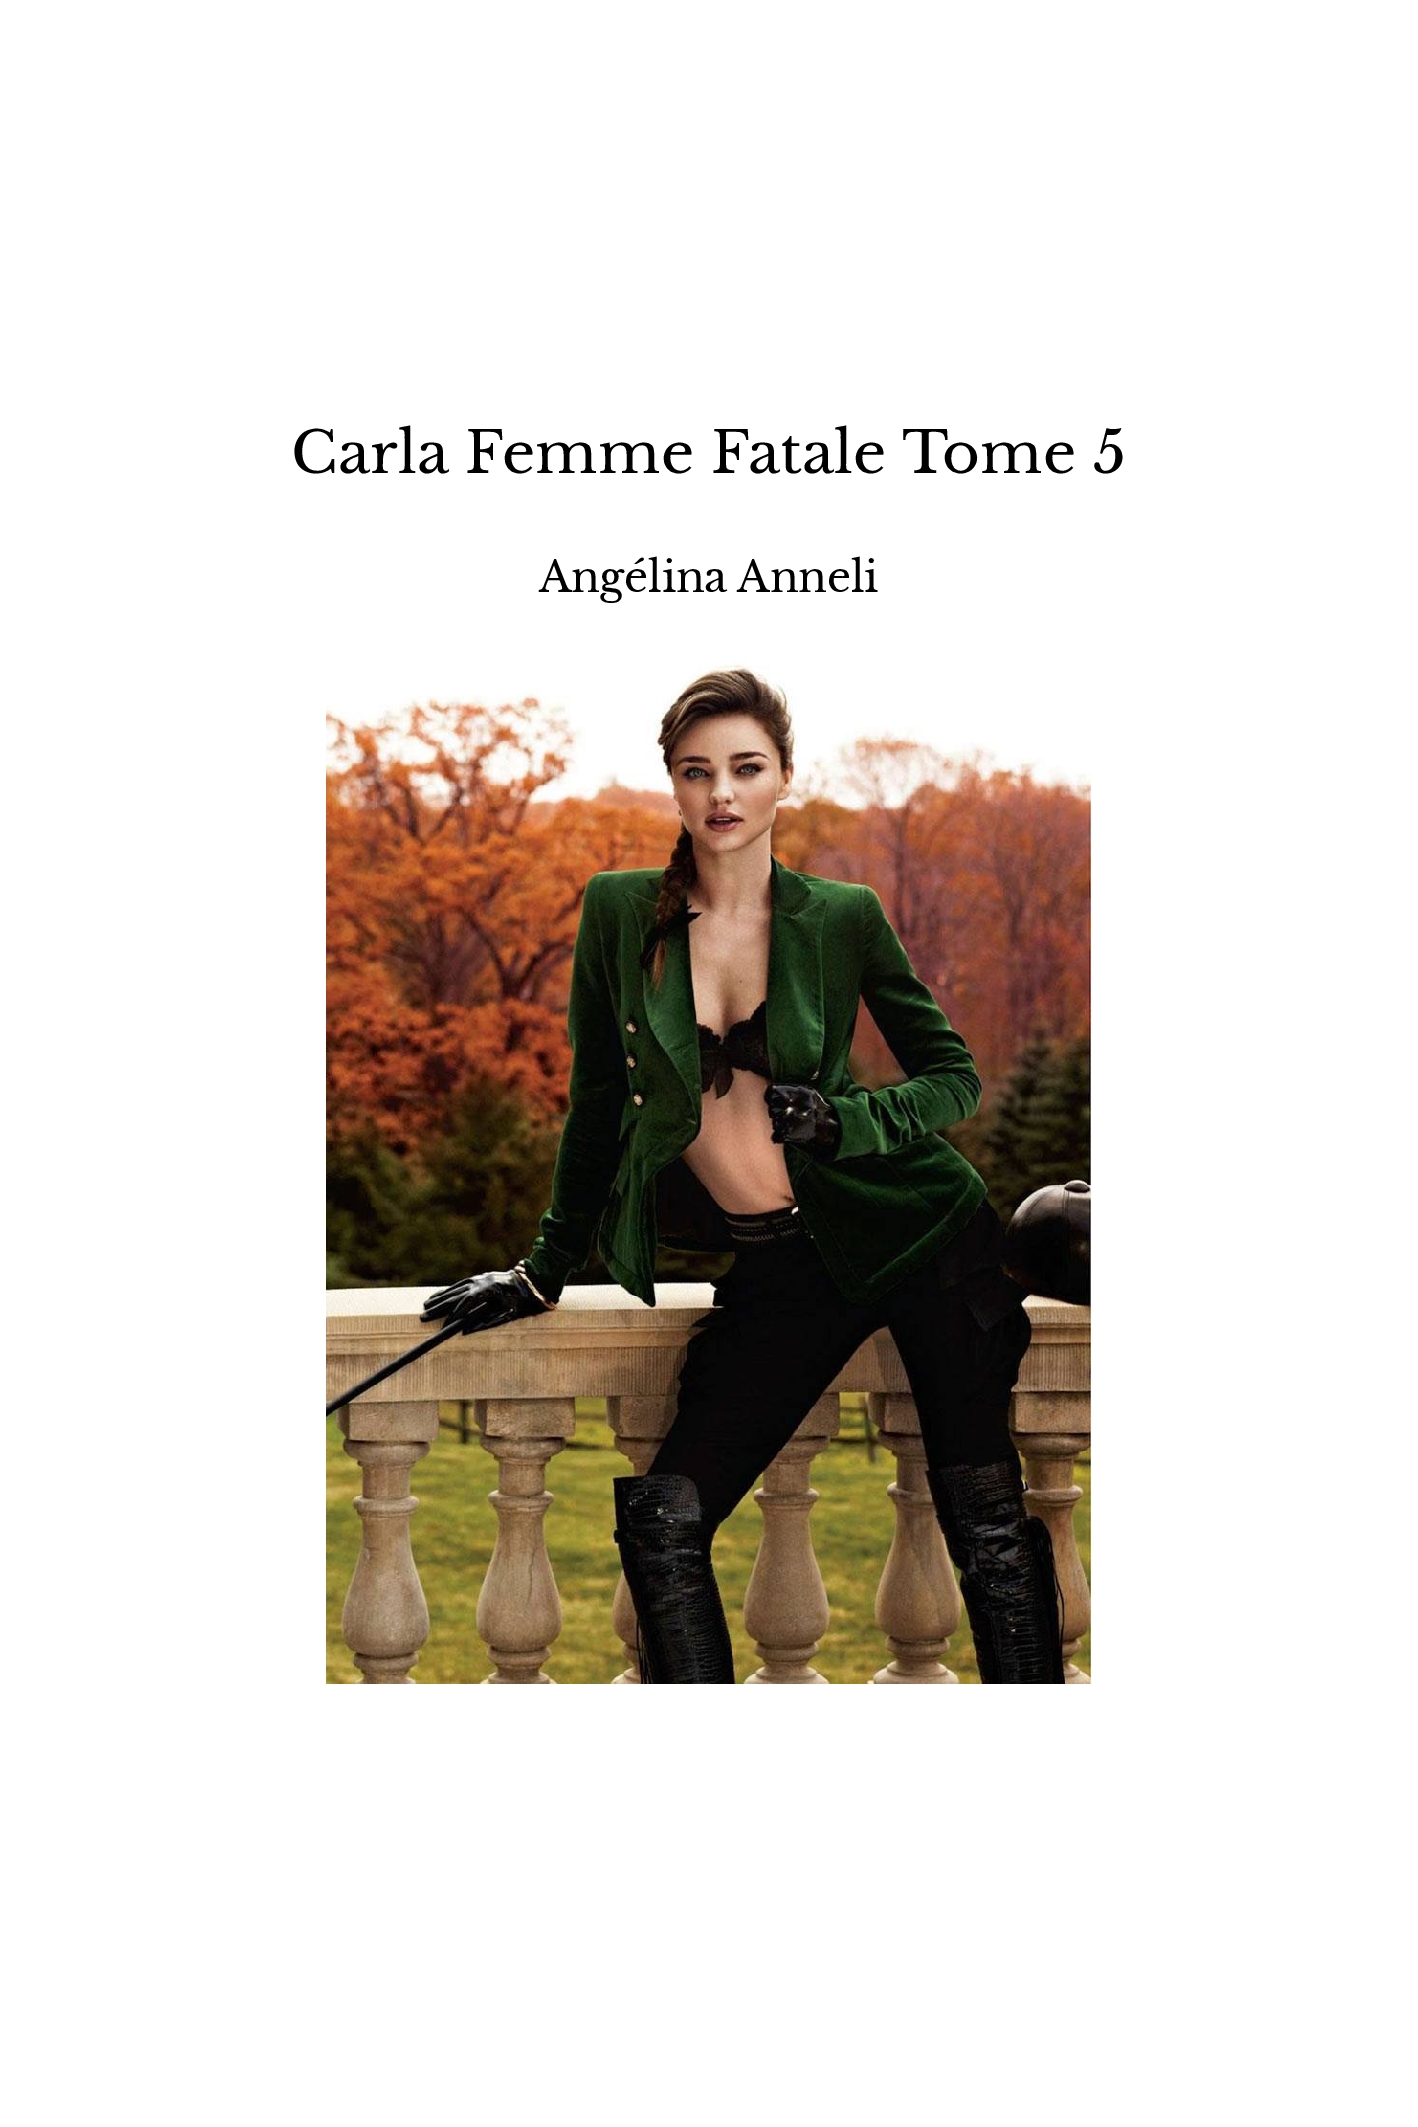 Carla Femme Fatale Tome 5